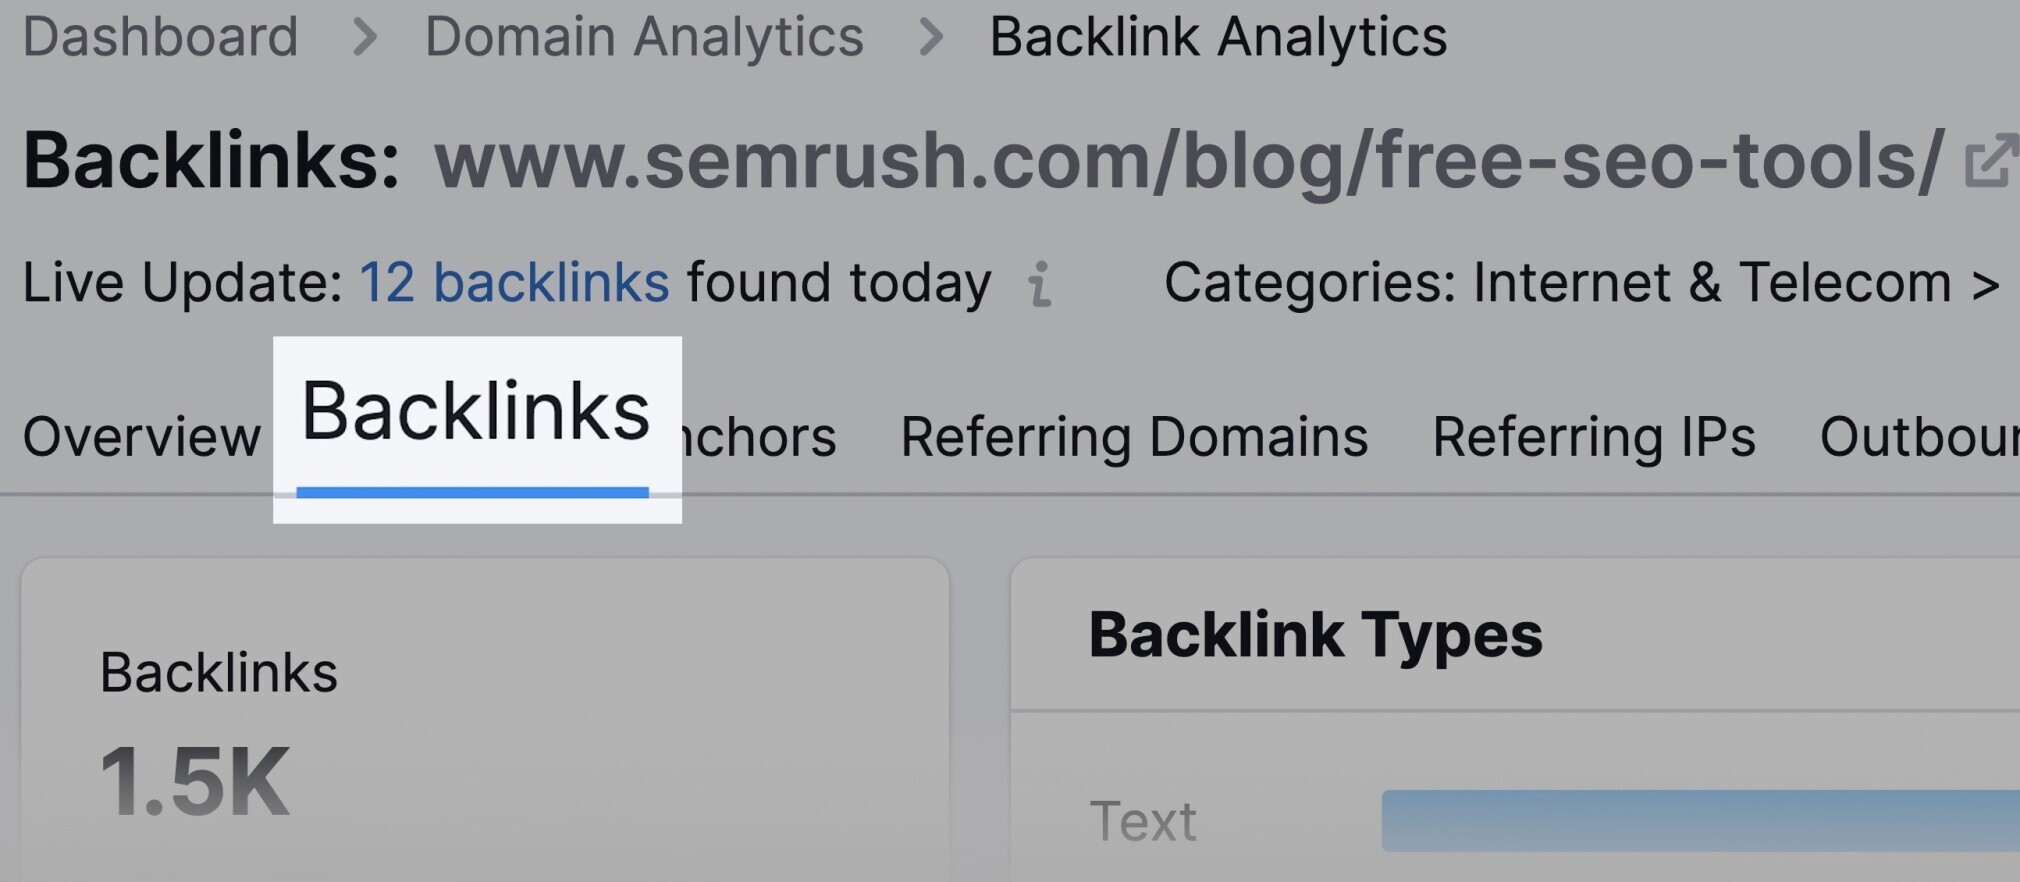 blog backlink analytics tool navigation